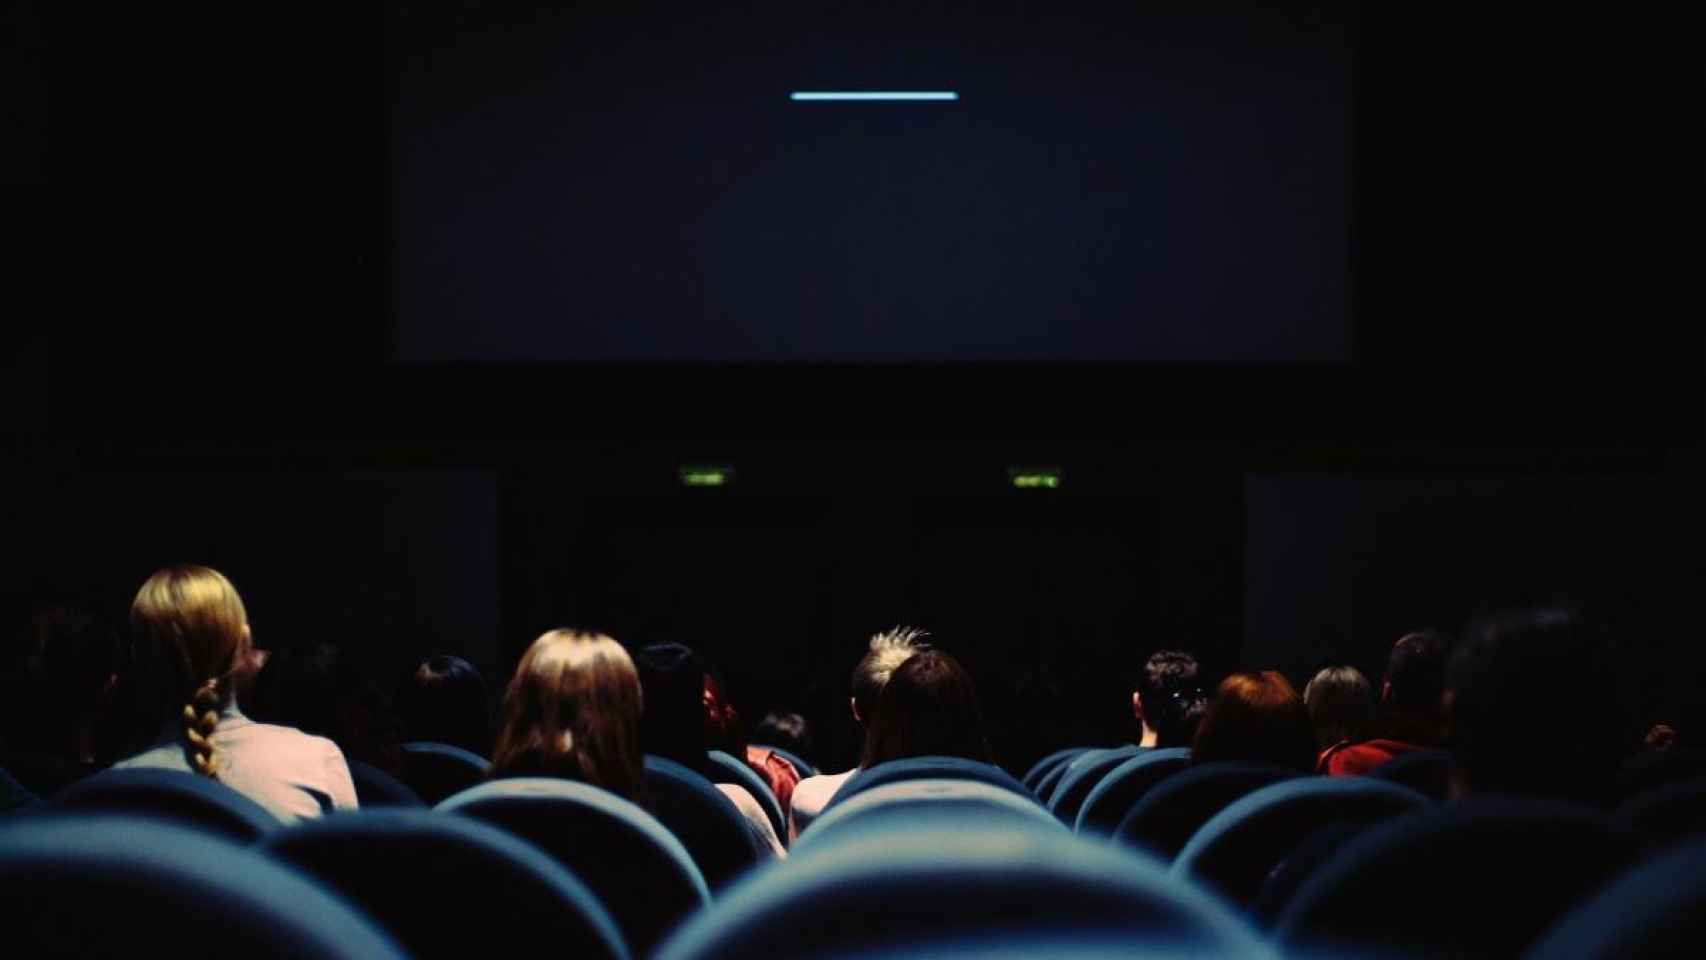 Espectadores en un cine / Erik Witsoe en UNSPLASH